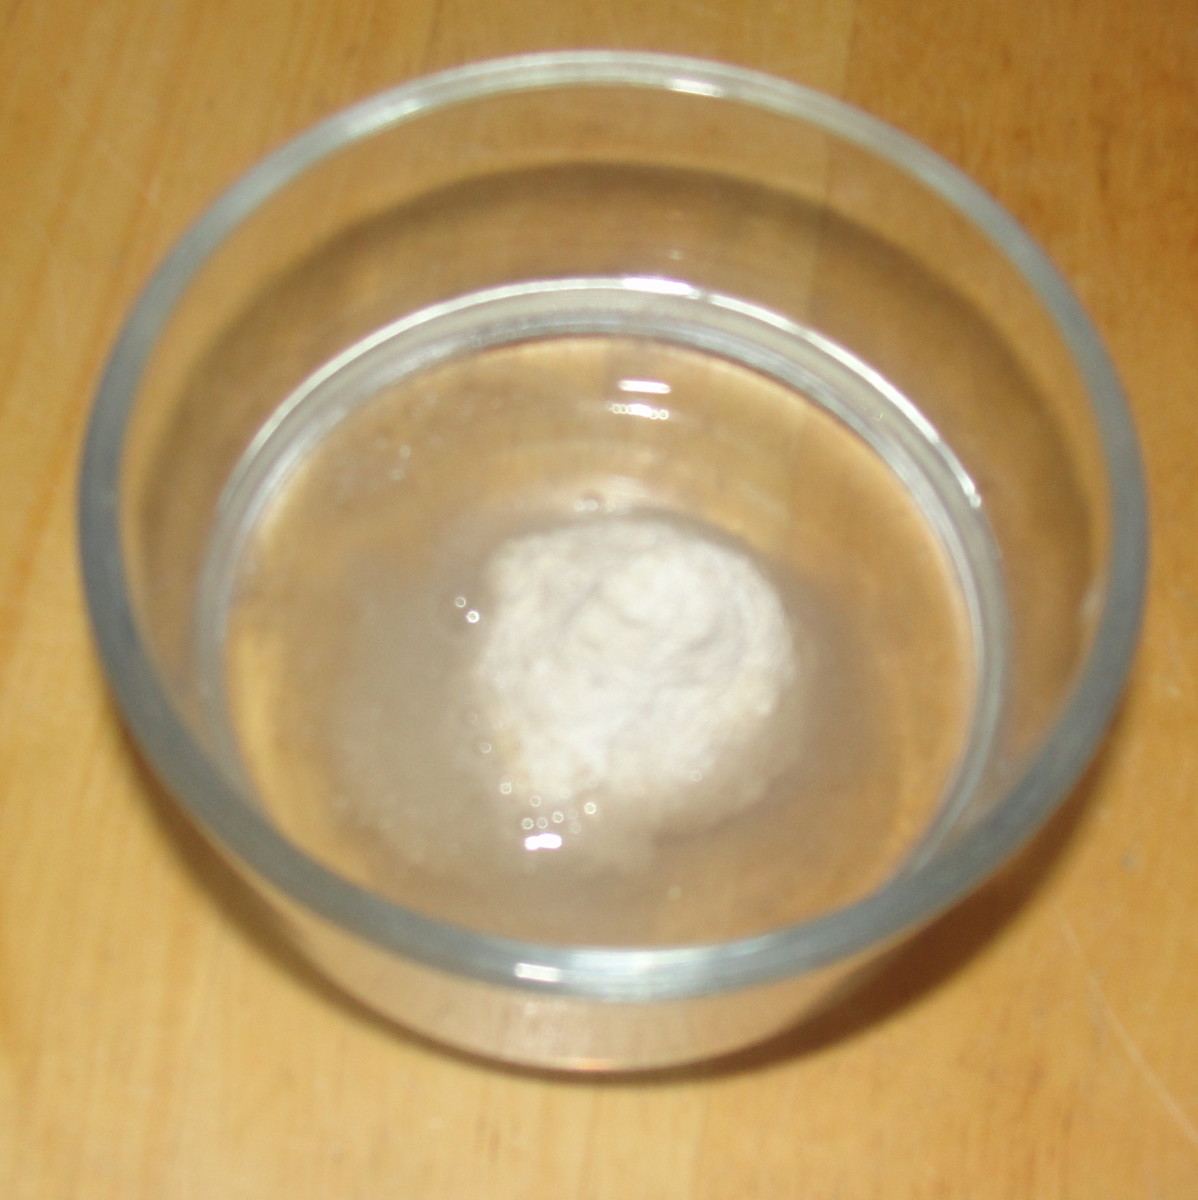 Limestone dissolving in vinegar